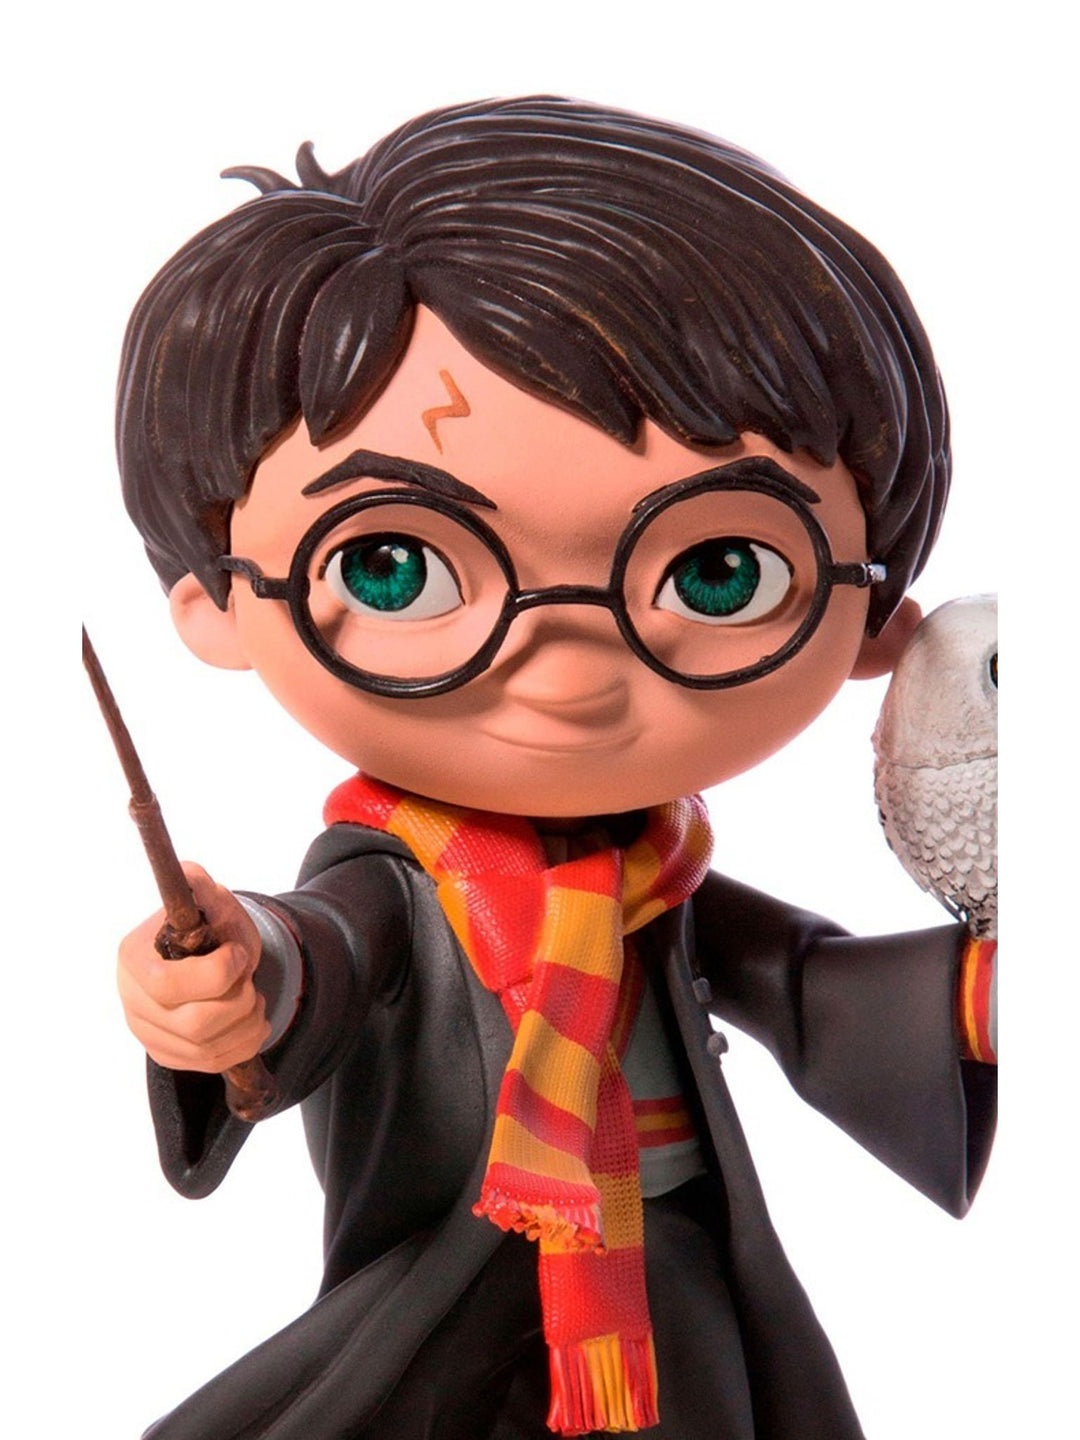 Official Harry Potter Iron Studios Harry Potter Mini Co. Figure